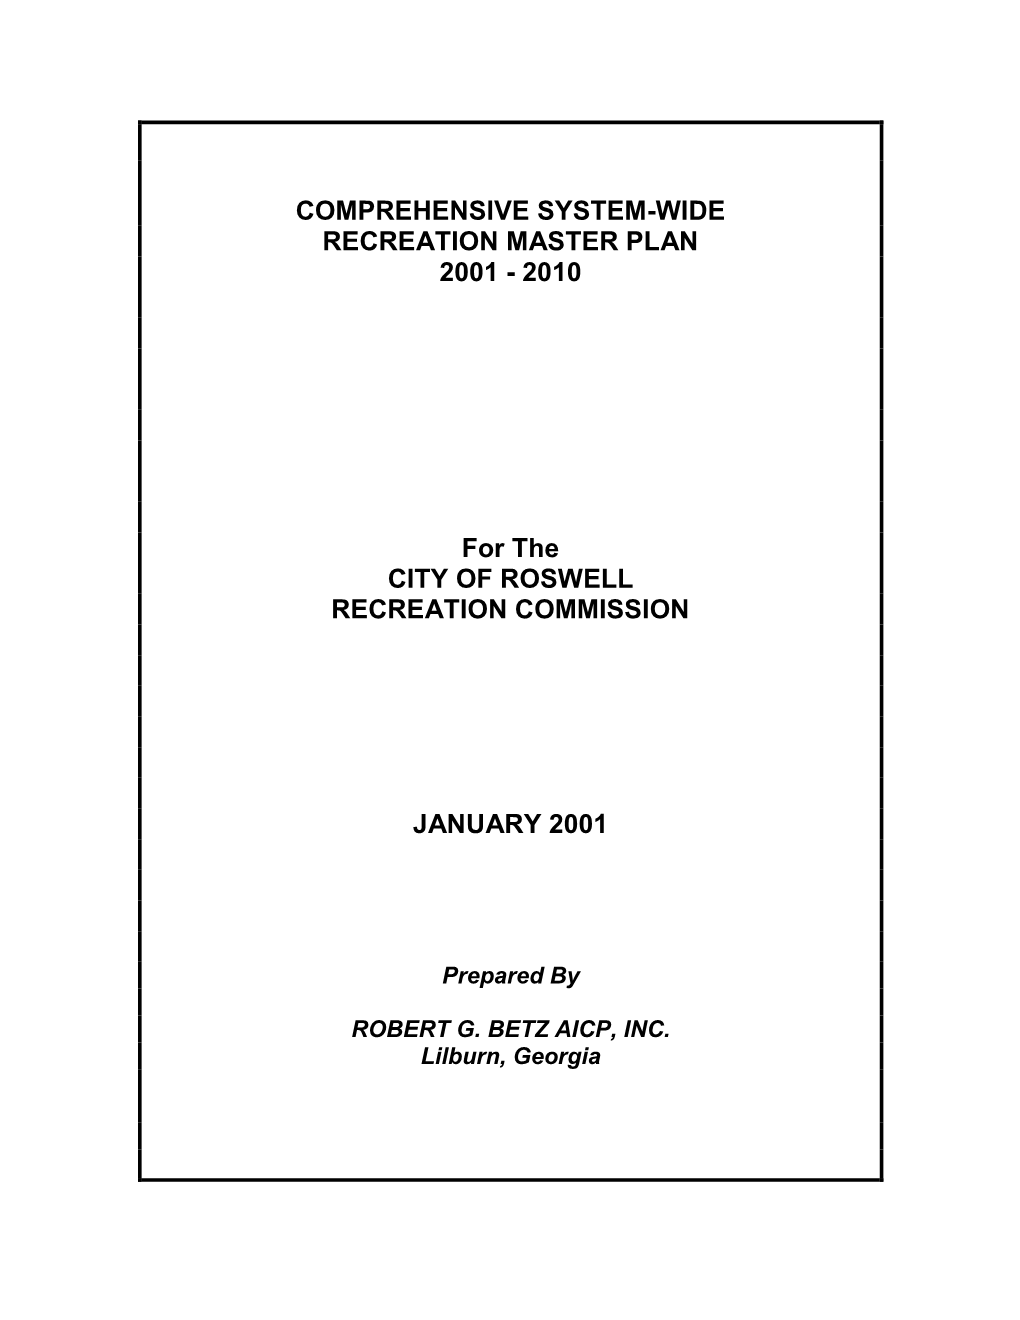 Comprehensive System-Wide Recreation Master Plan 2001 - 2010